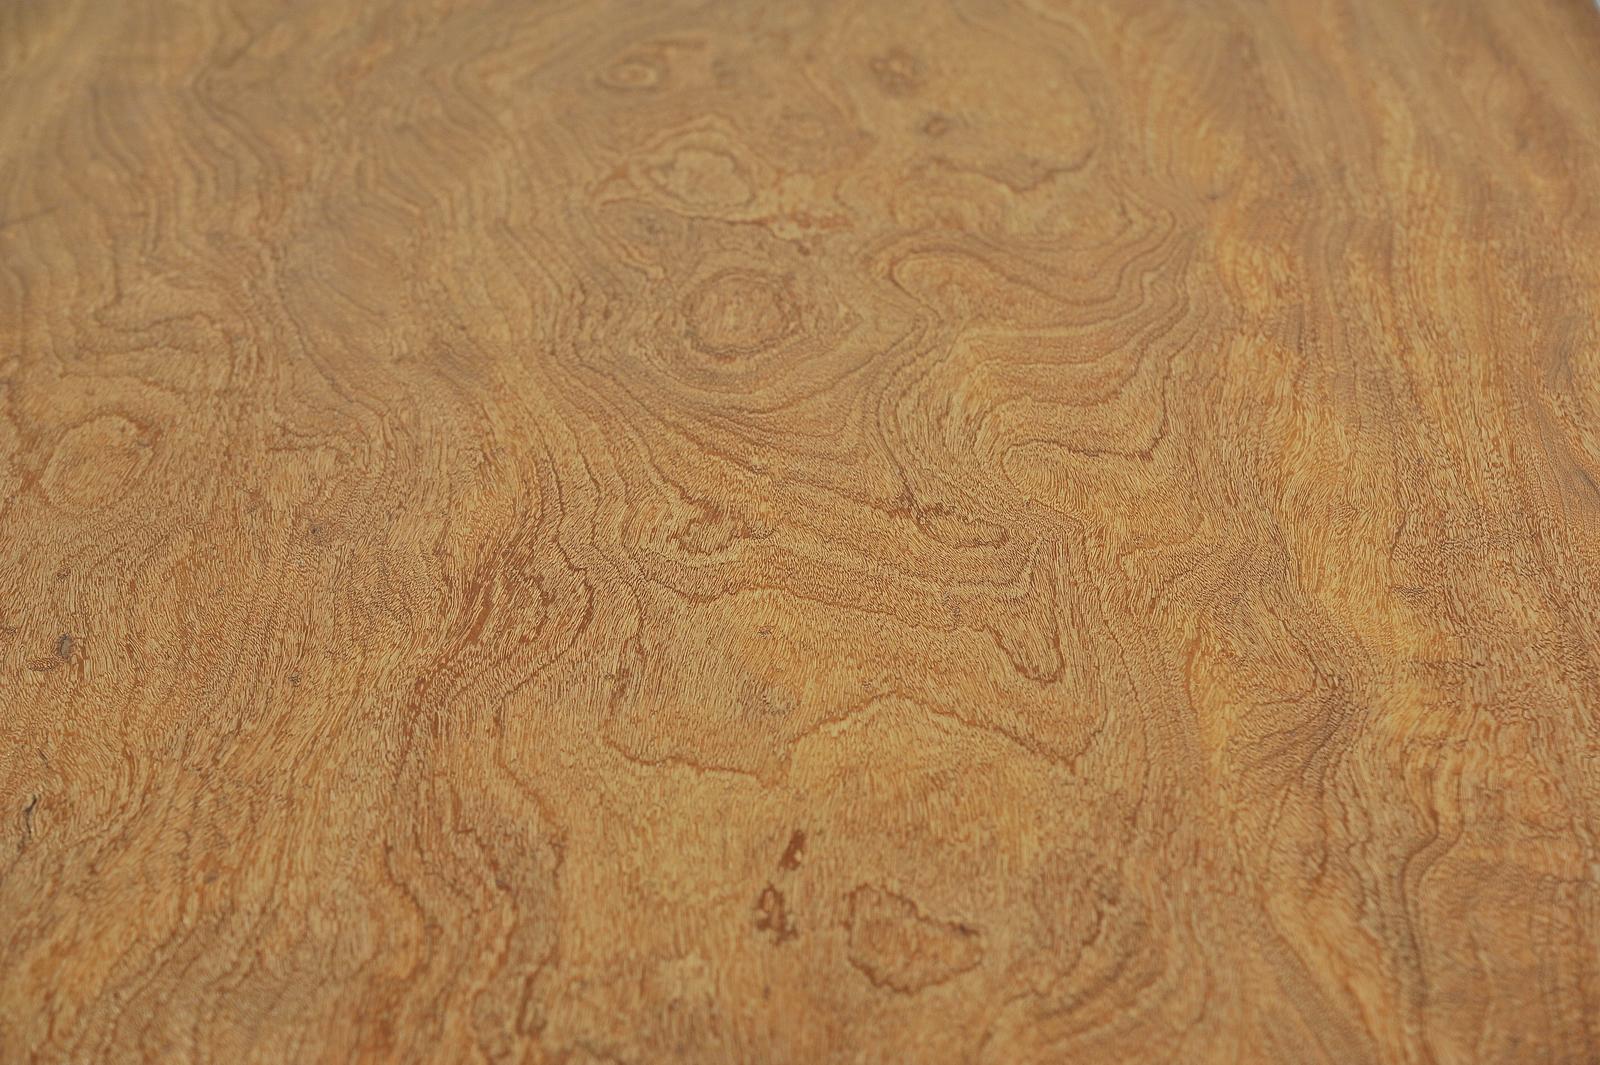 Bespoke Table, Antique Hardwood, Sand cast Aluminum Base by P. Tendercool For Sale 2